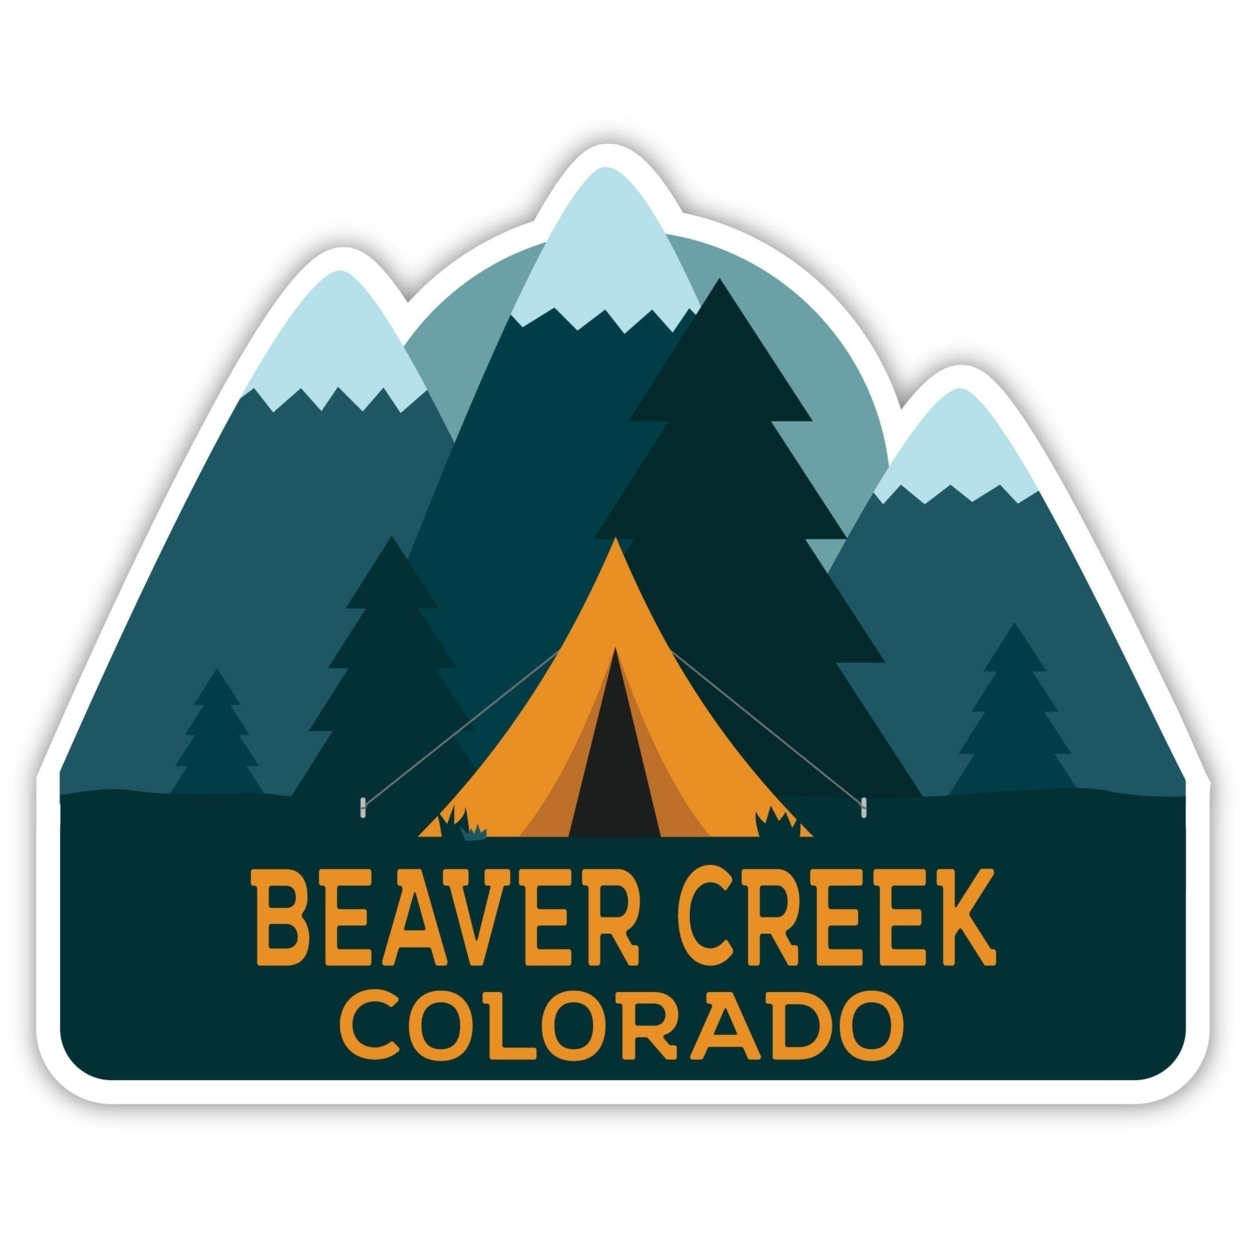 Beaver Creek Colorado Souvenir Decorative Stickers (Choose Theme And Size) - 4-Pack, 2-Inch, Tent